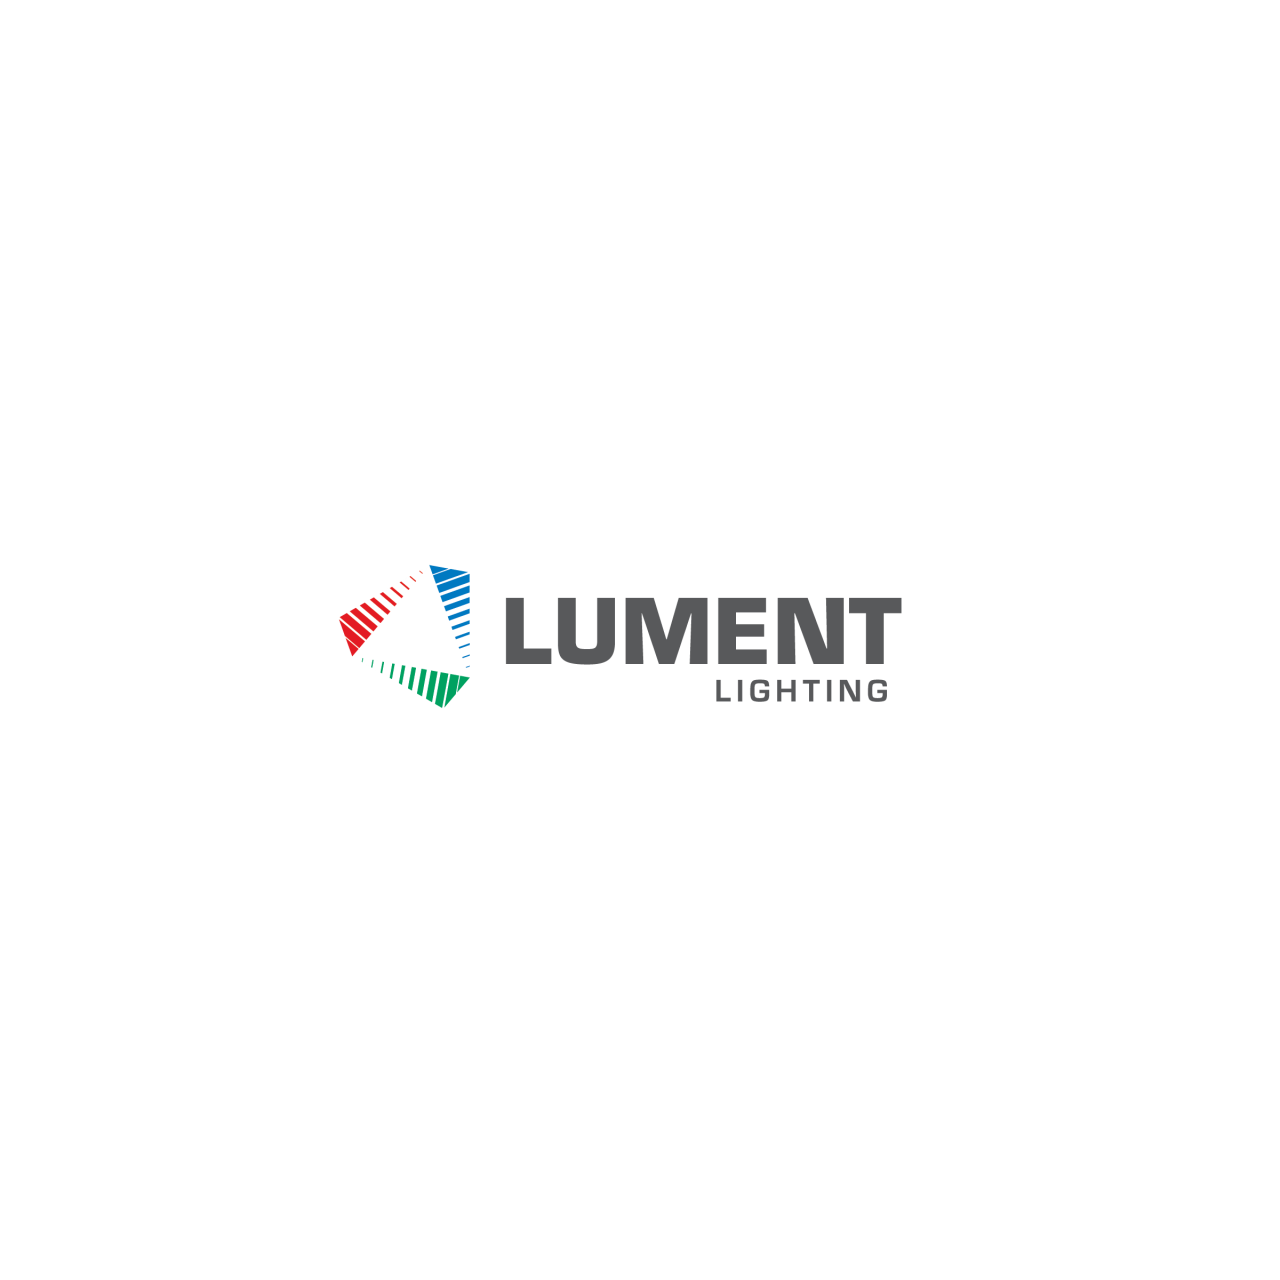 Image of Lument Lighting logo